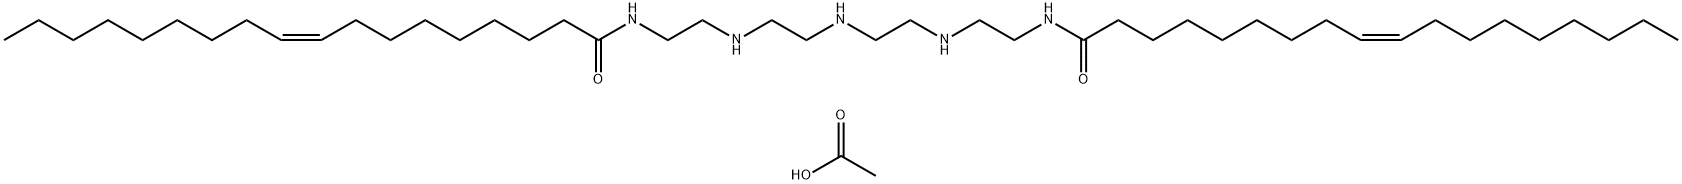 N,N'-[iminobis(ethyleneiminoethylene)]bis(stearamide) monoacetate|